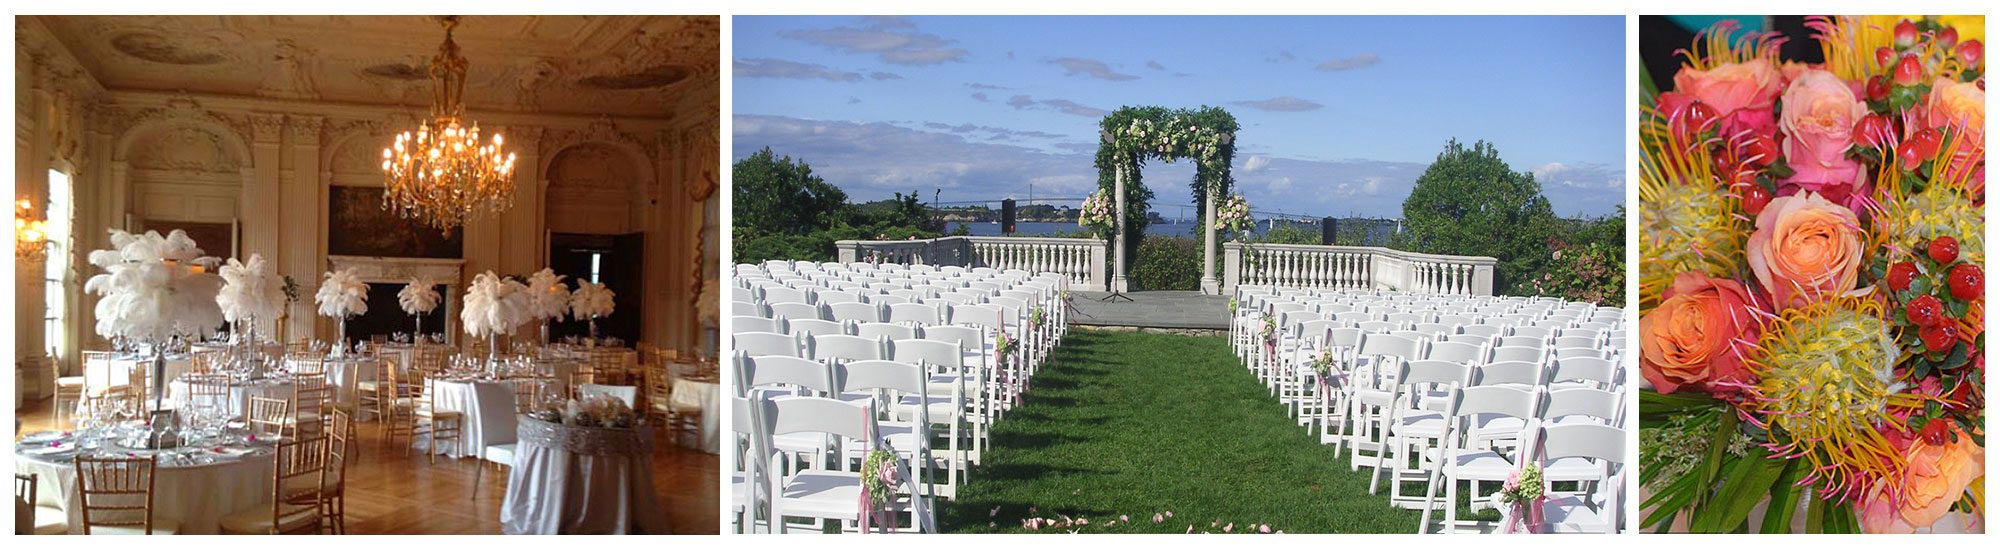 plan your dream wedding reception in newport ri